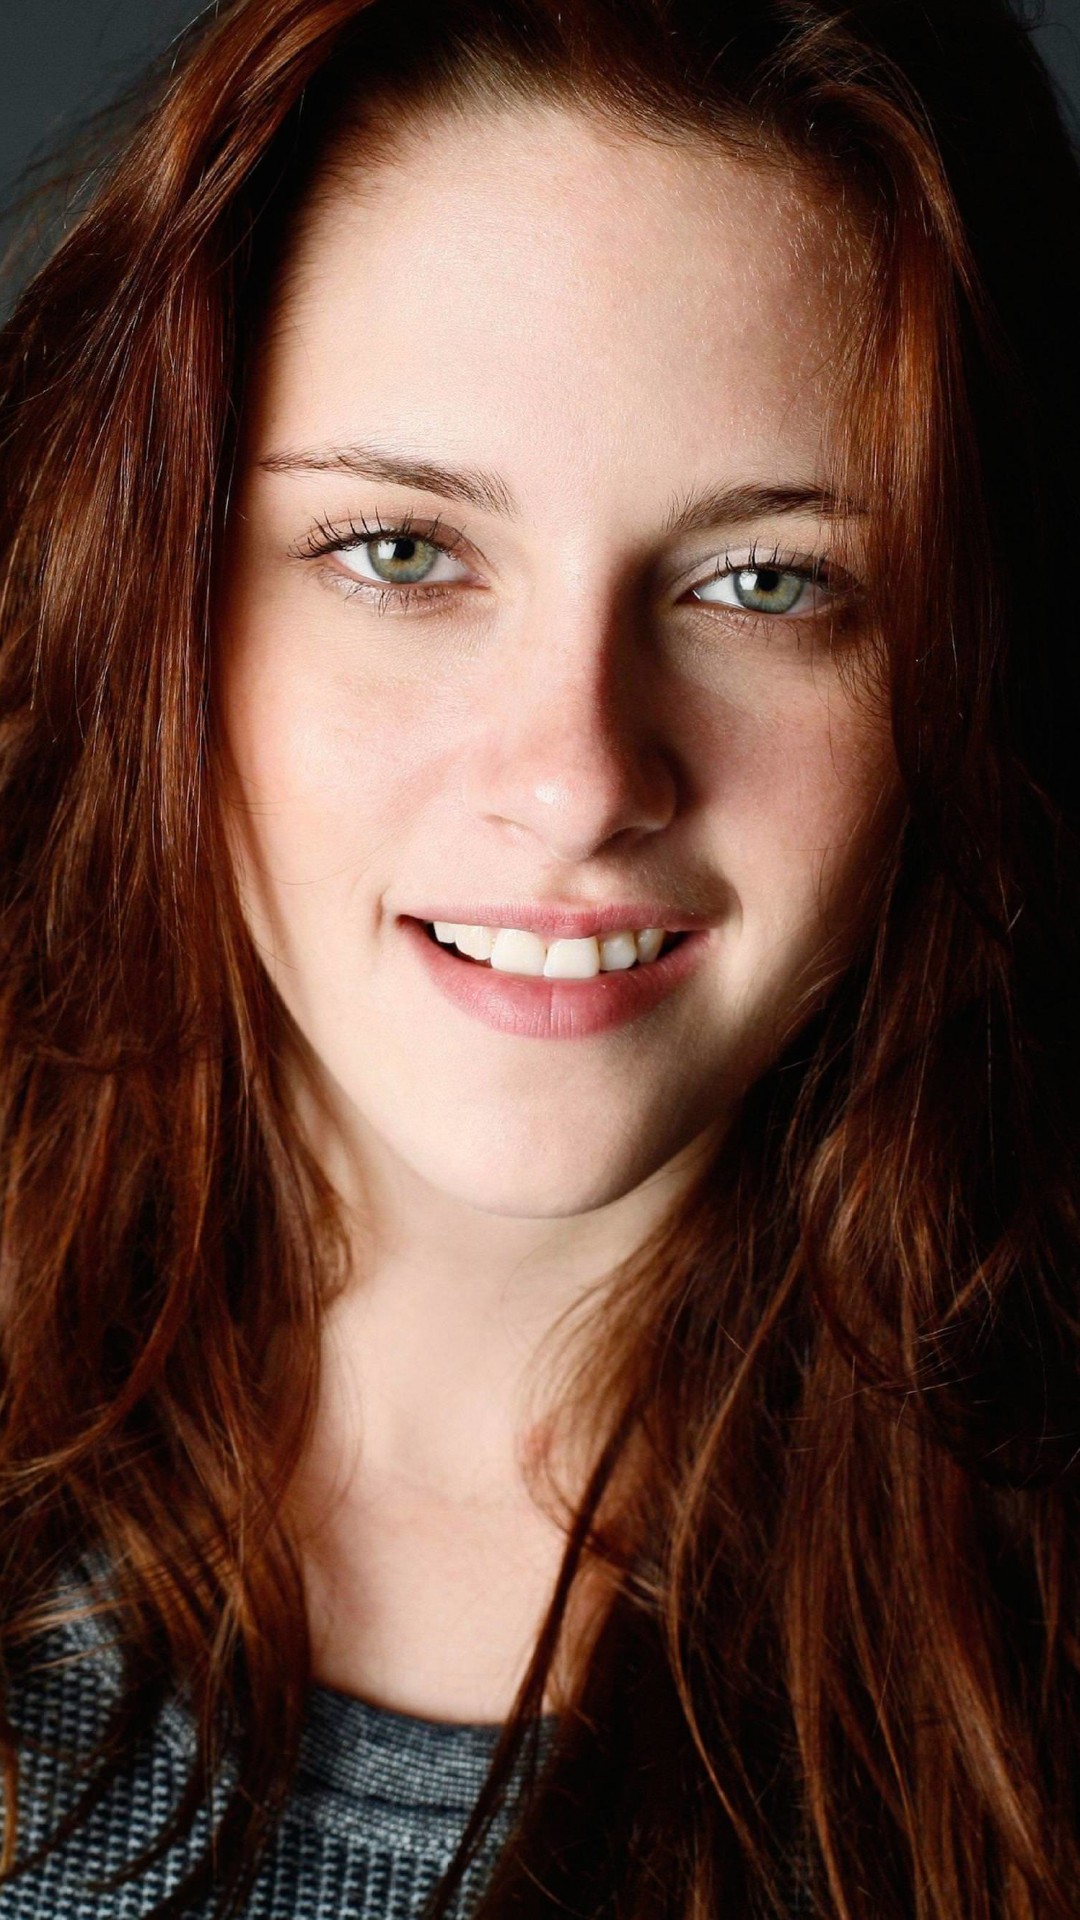 Kristen Stewart Portrait Wallpaper for HTC One